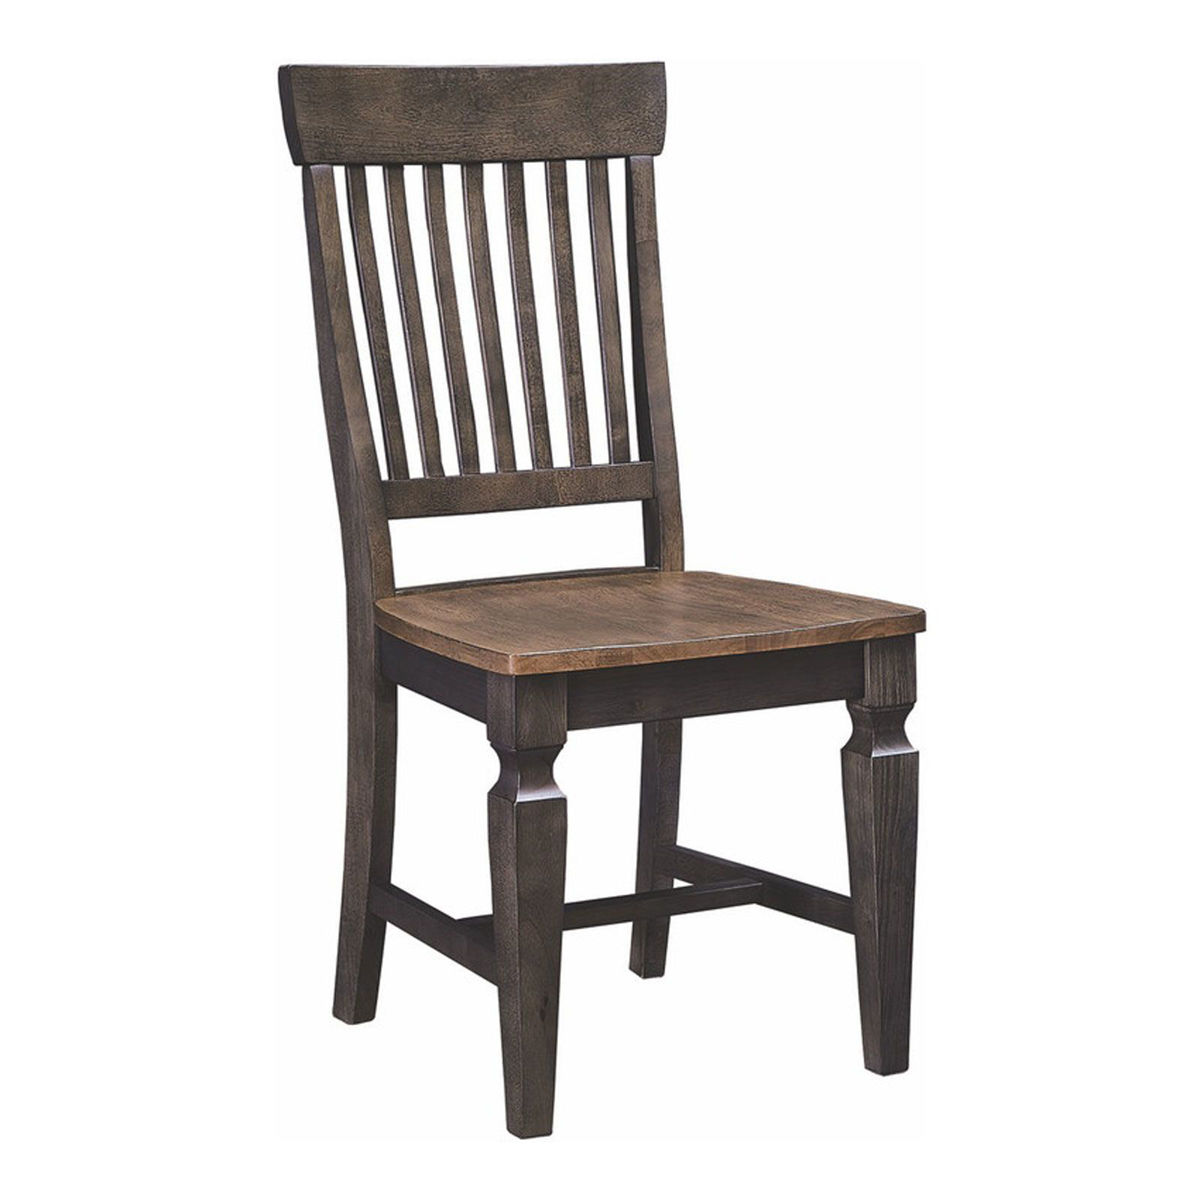 Picture of Vista Slatback Side Chair